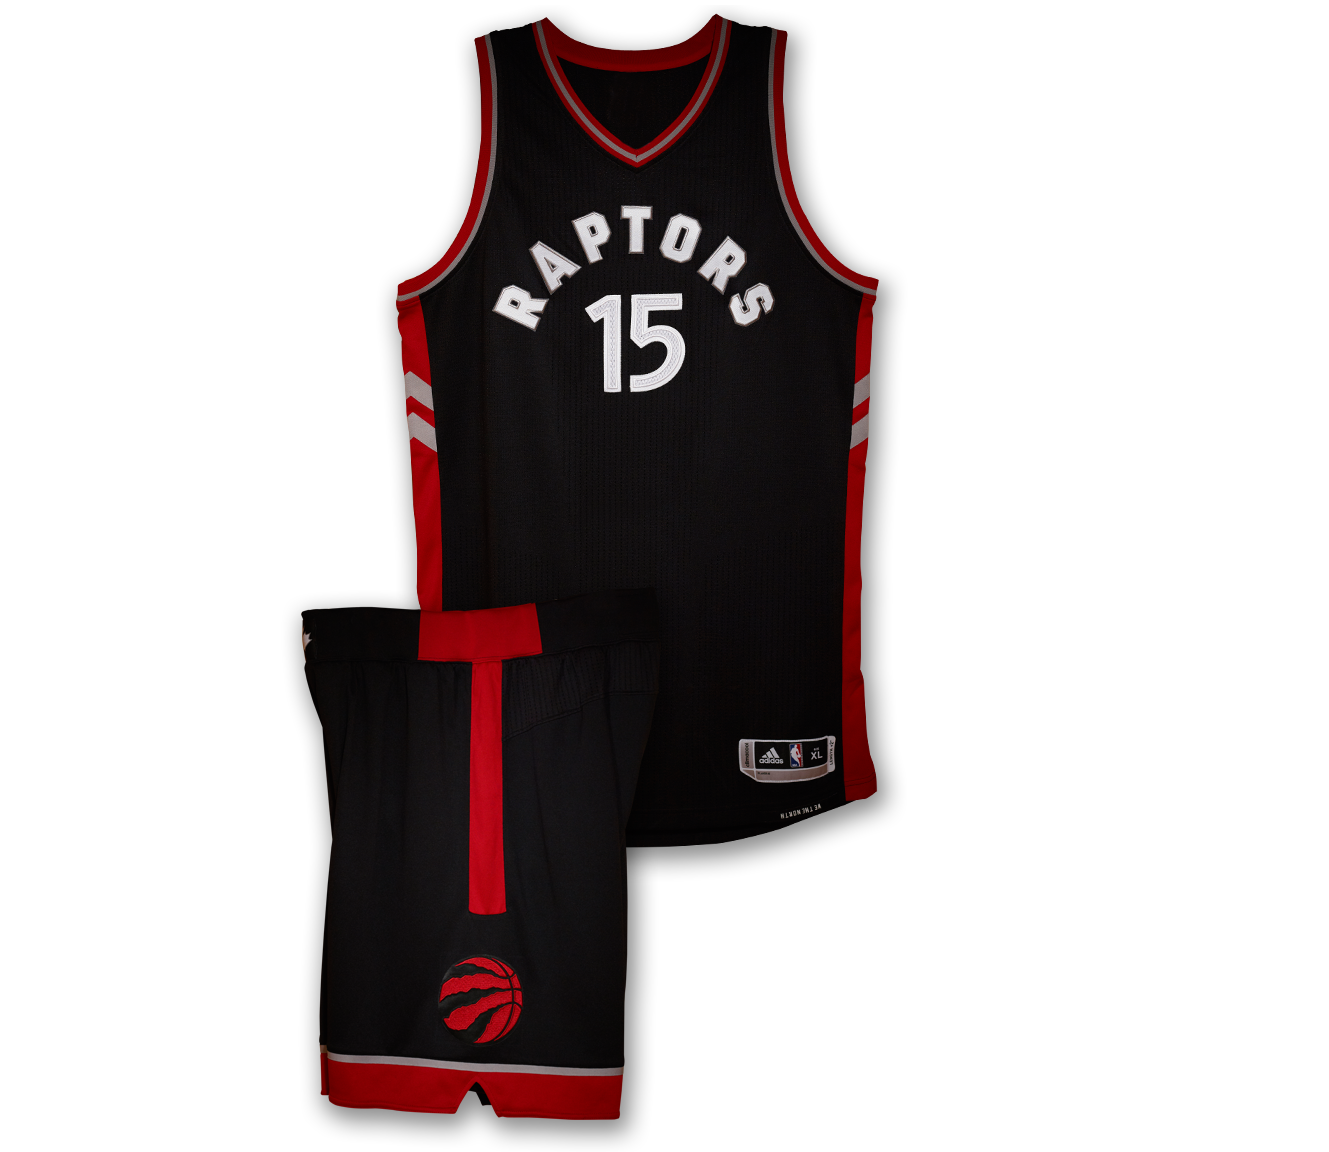 Toronto Raptors - Alternate uniform 1